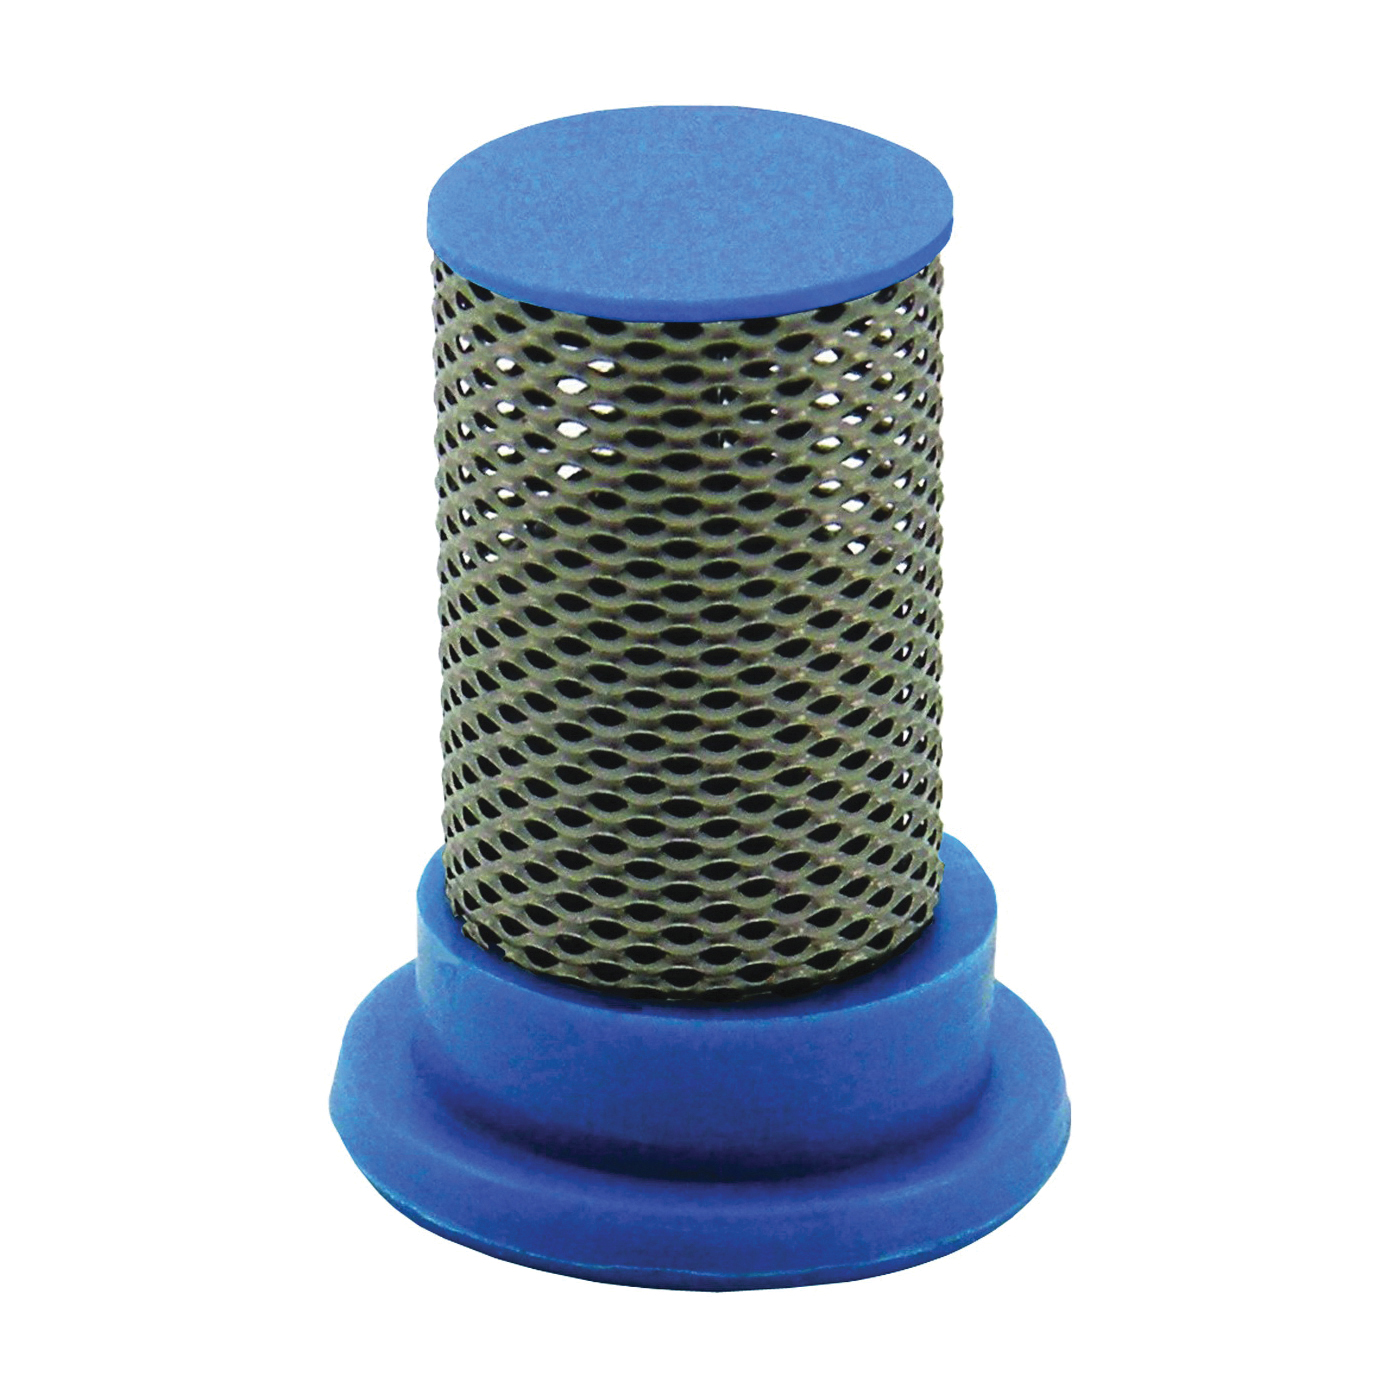 Y8139002 6PK Tip Filter, Spray, Polypropylene/Stainless Steel, Blue